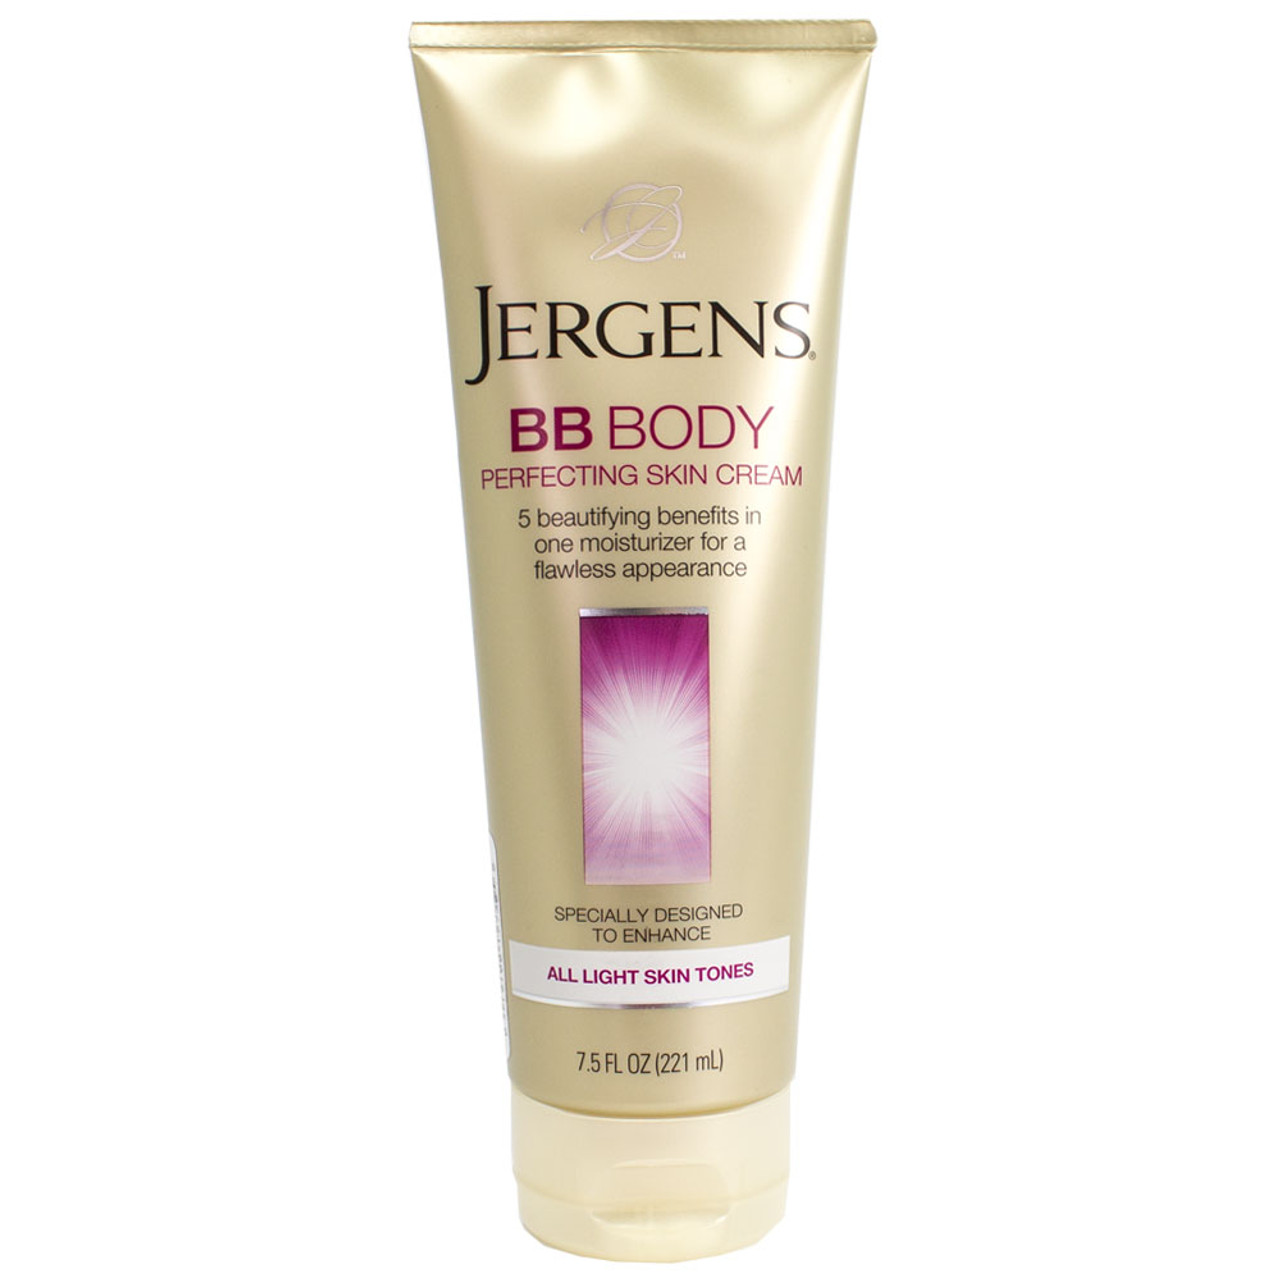 Pekkadillo reservering Ingang Jergens BB Body Perfecting Skin Cream for All Light Skin Tones 7.5 fl oz -  BuyMeBeauty.com